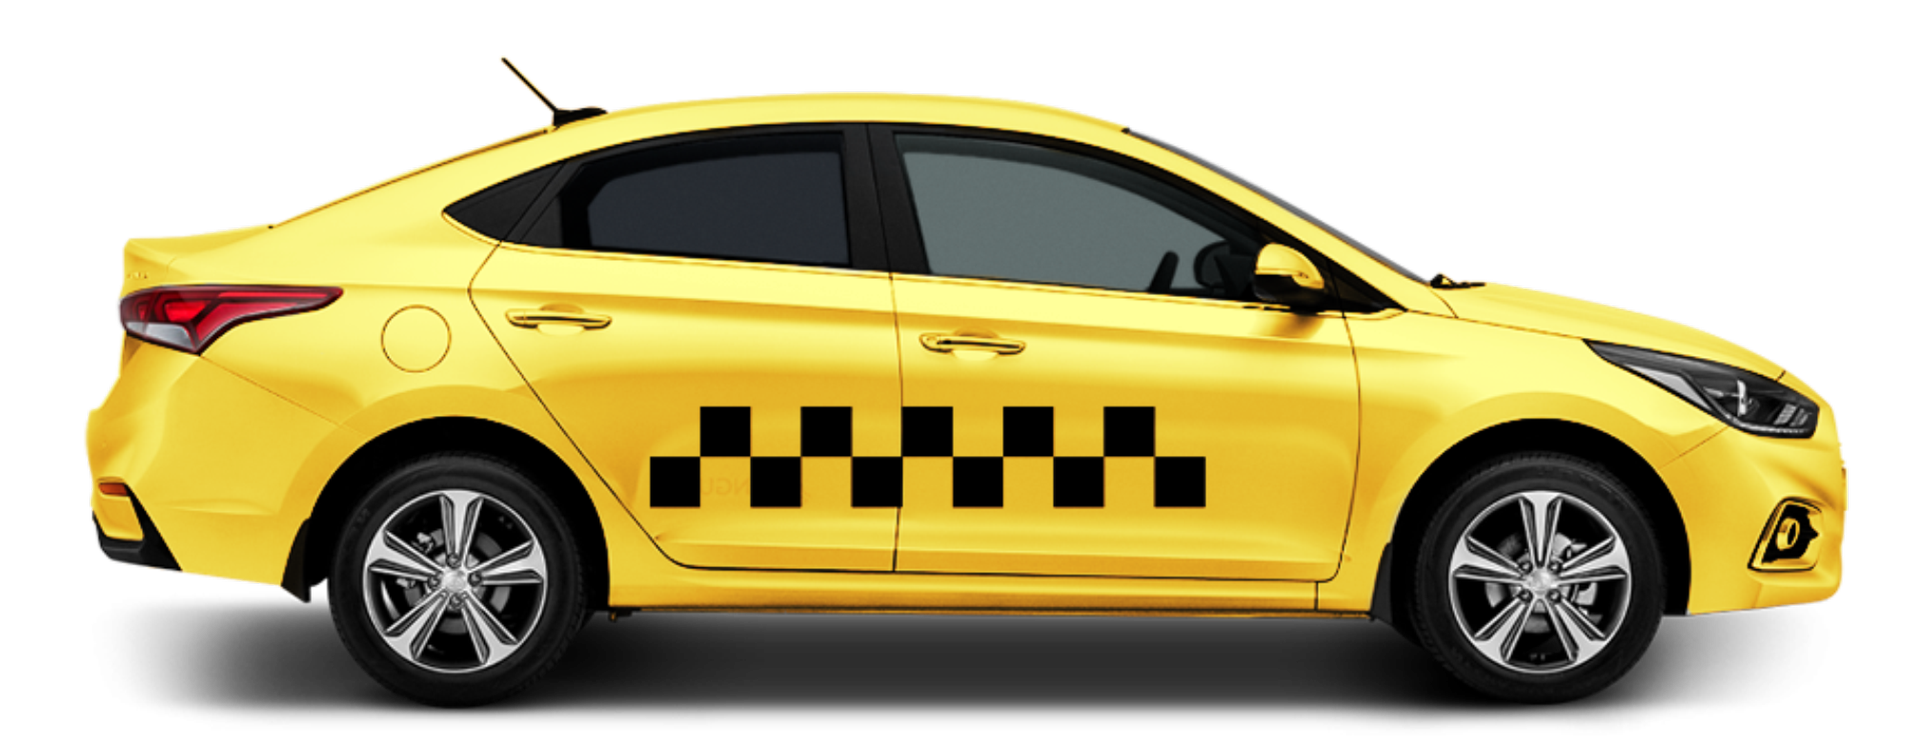 Hyundai Solaris Taxi. Hyundai Solaris желтый. Hyundai Solaris 2017 такси. Hyundai Solaris 2014 такси. Купить такси в кредит